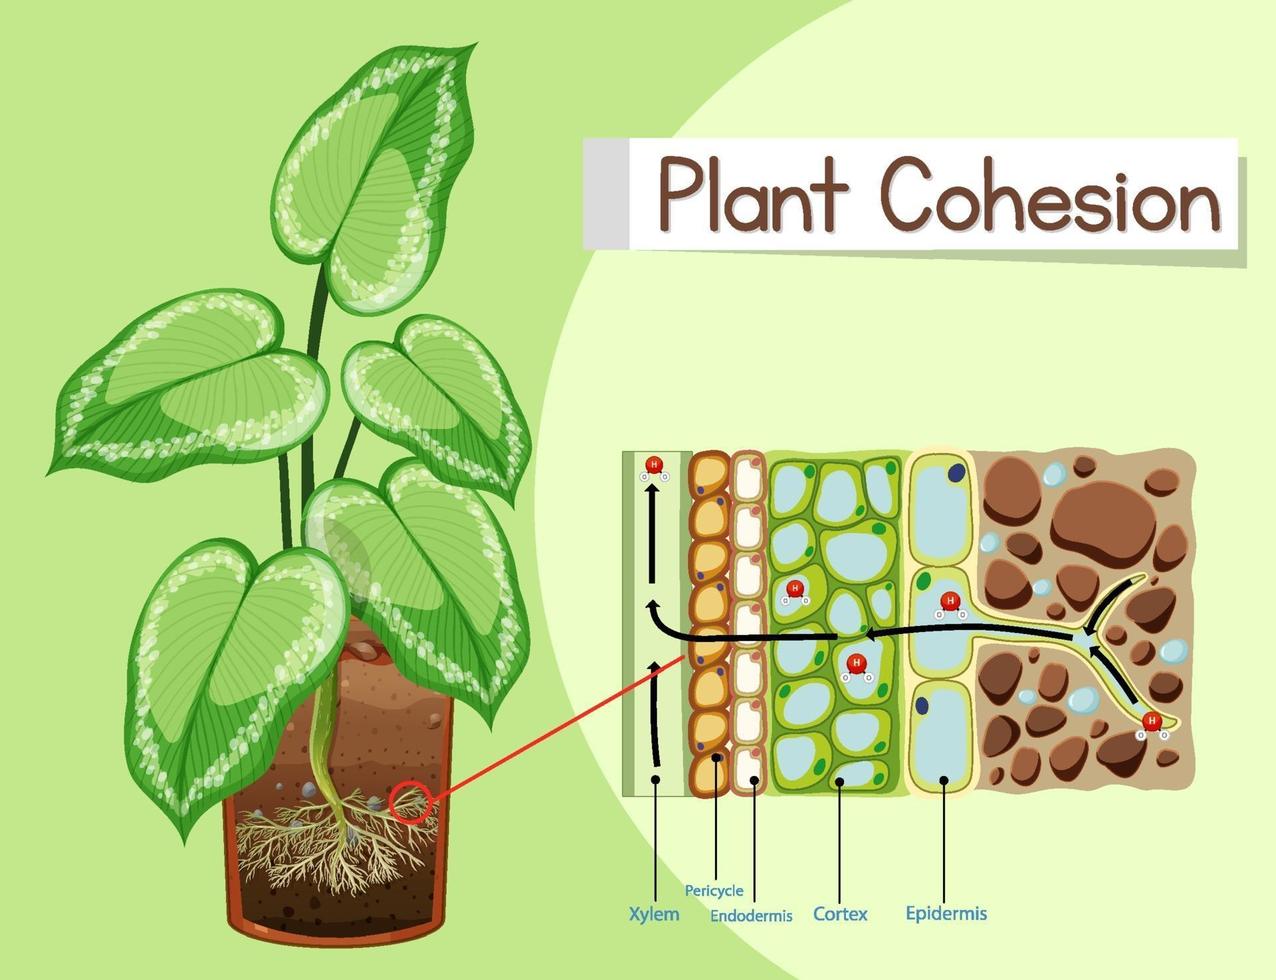 diagram dat plantcohesie toont vector